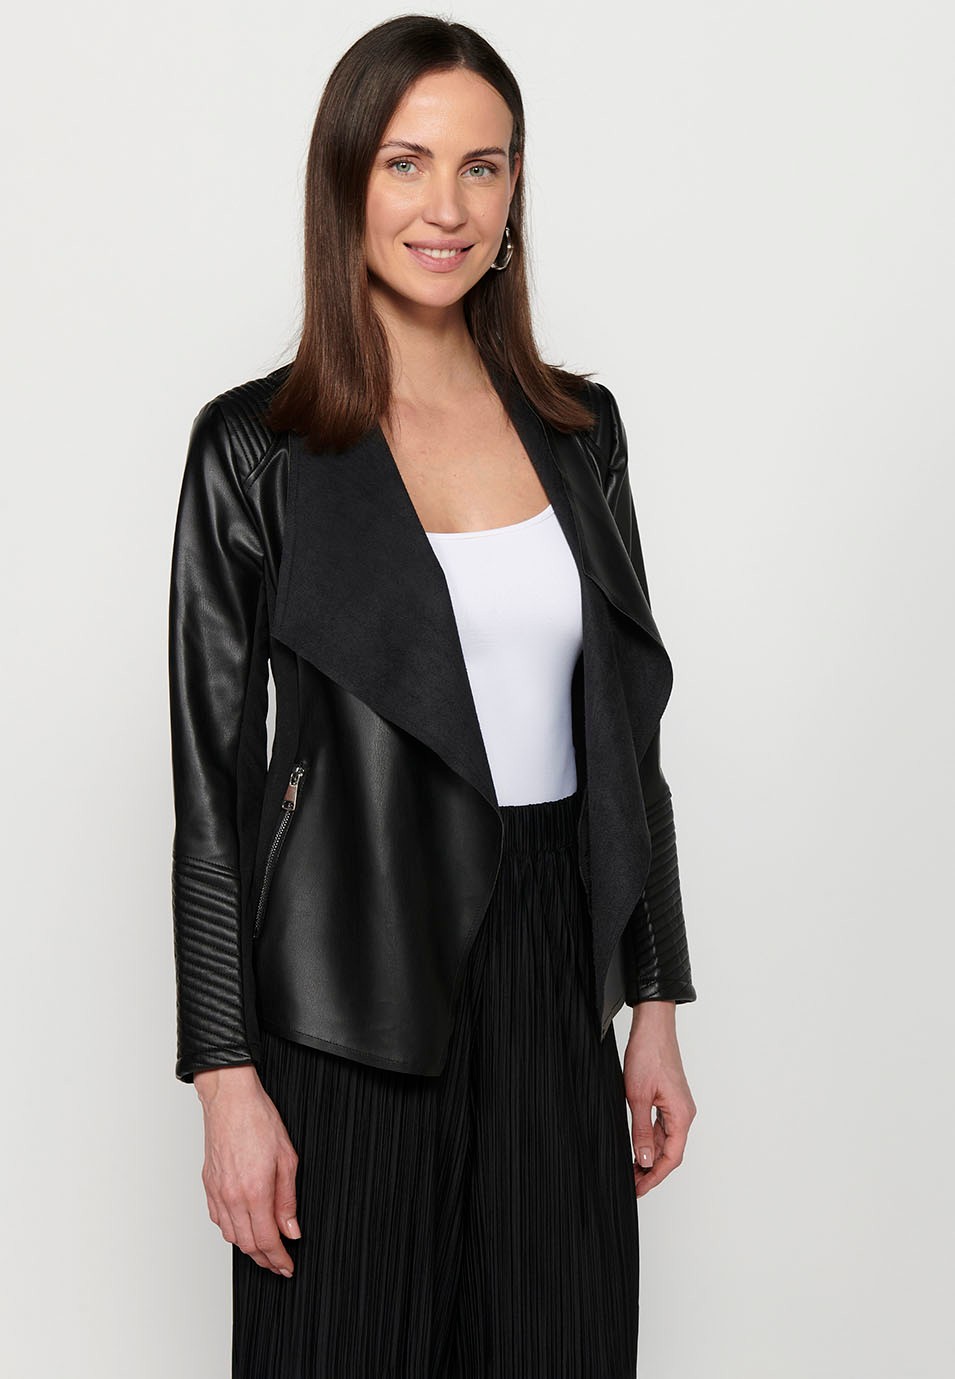 Long Sleeve Jacket, Asymmetrical Finish, Black Color for Women